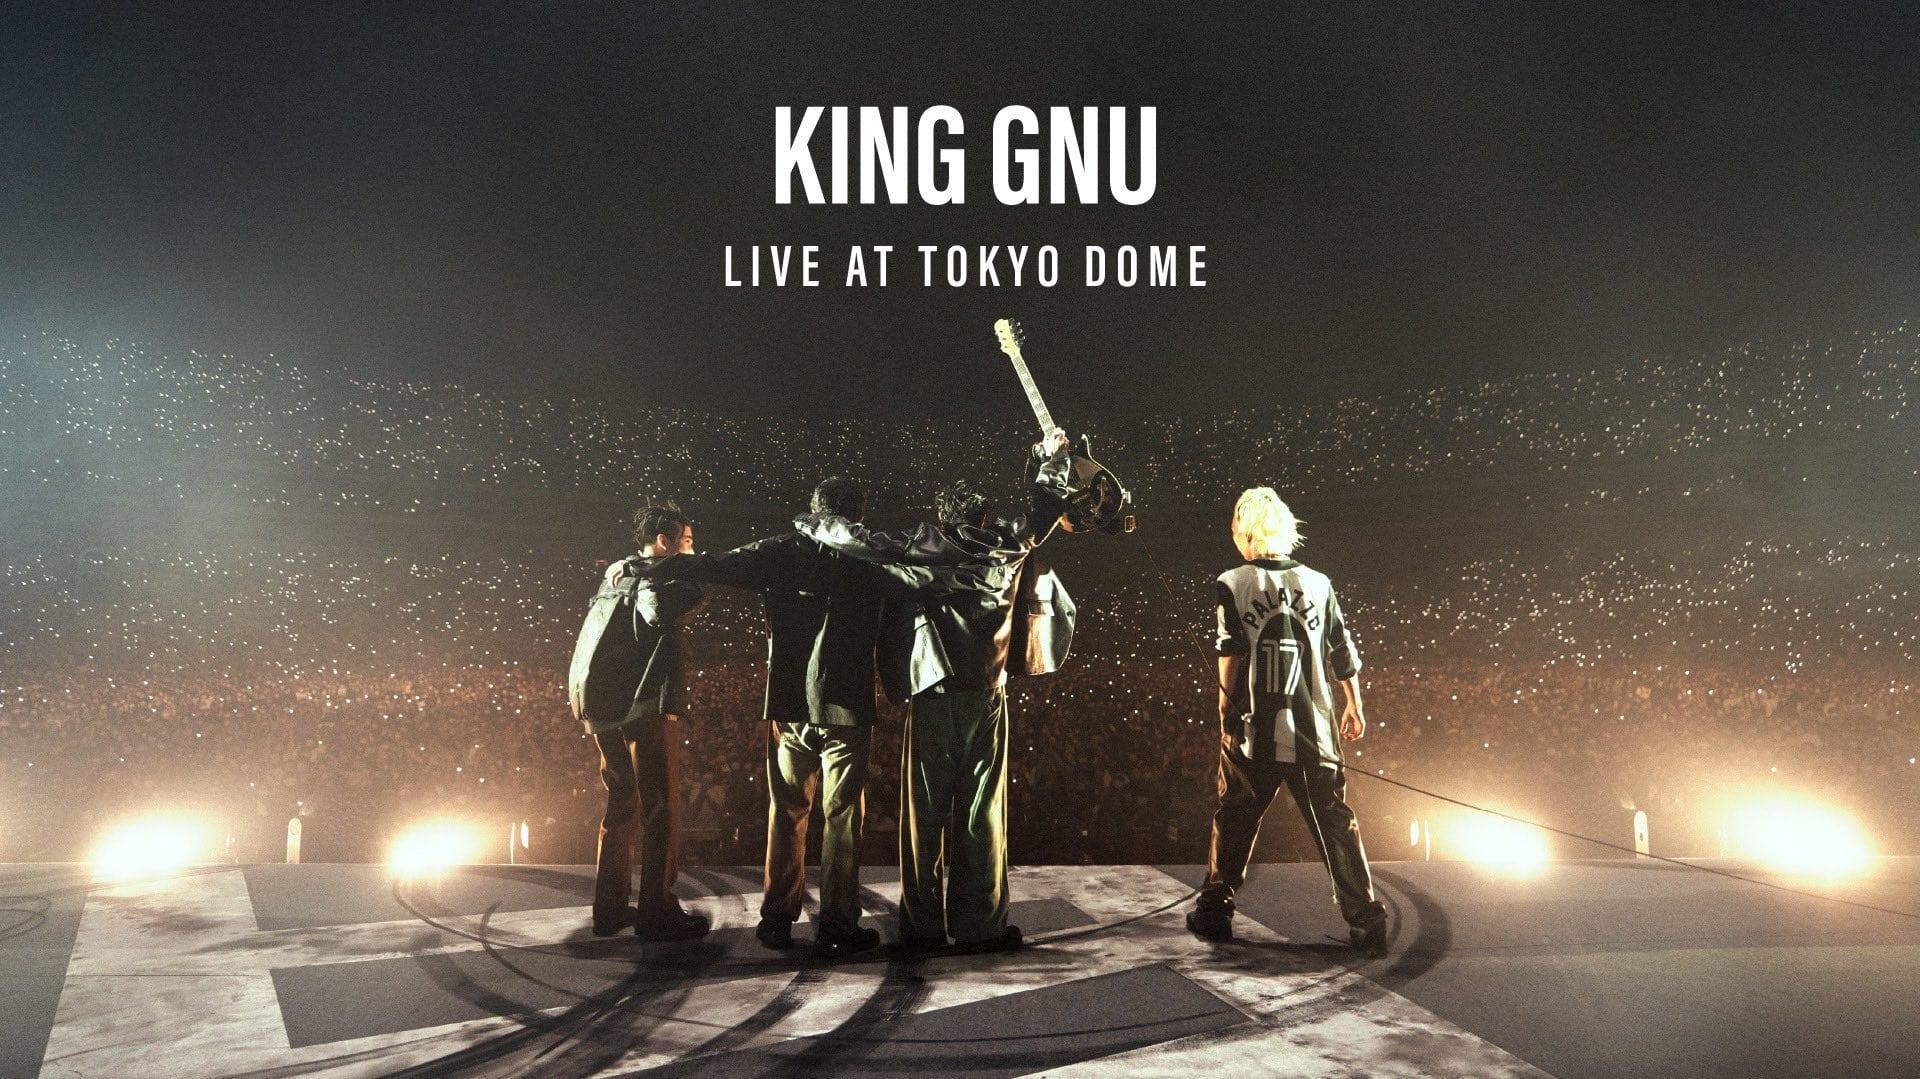 King Gnu Live at TOKYO DOME backdrop